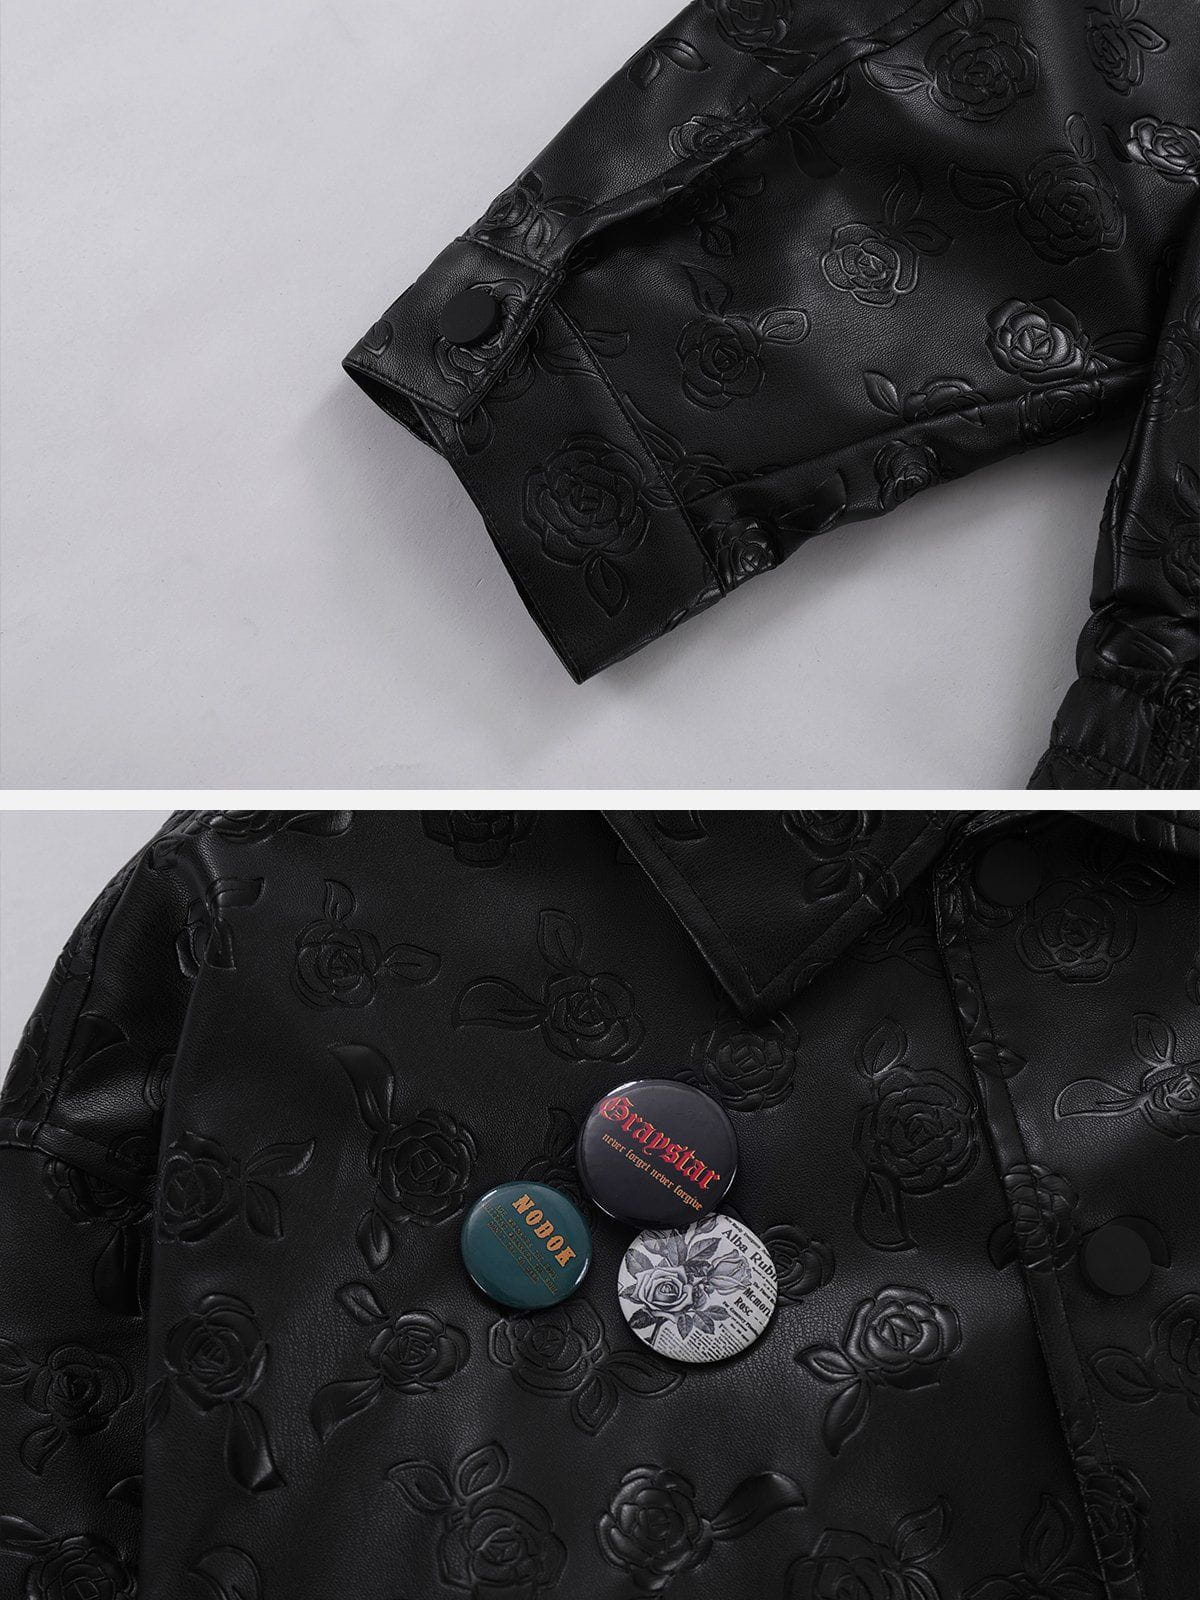 Eprezzy® - Rose Embroidery Brooch Jacket Streetwear Fashion - eprezzy.com